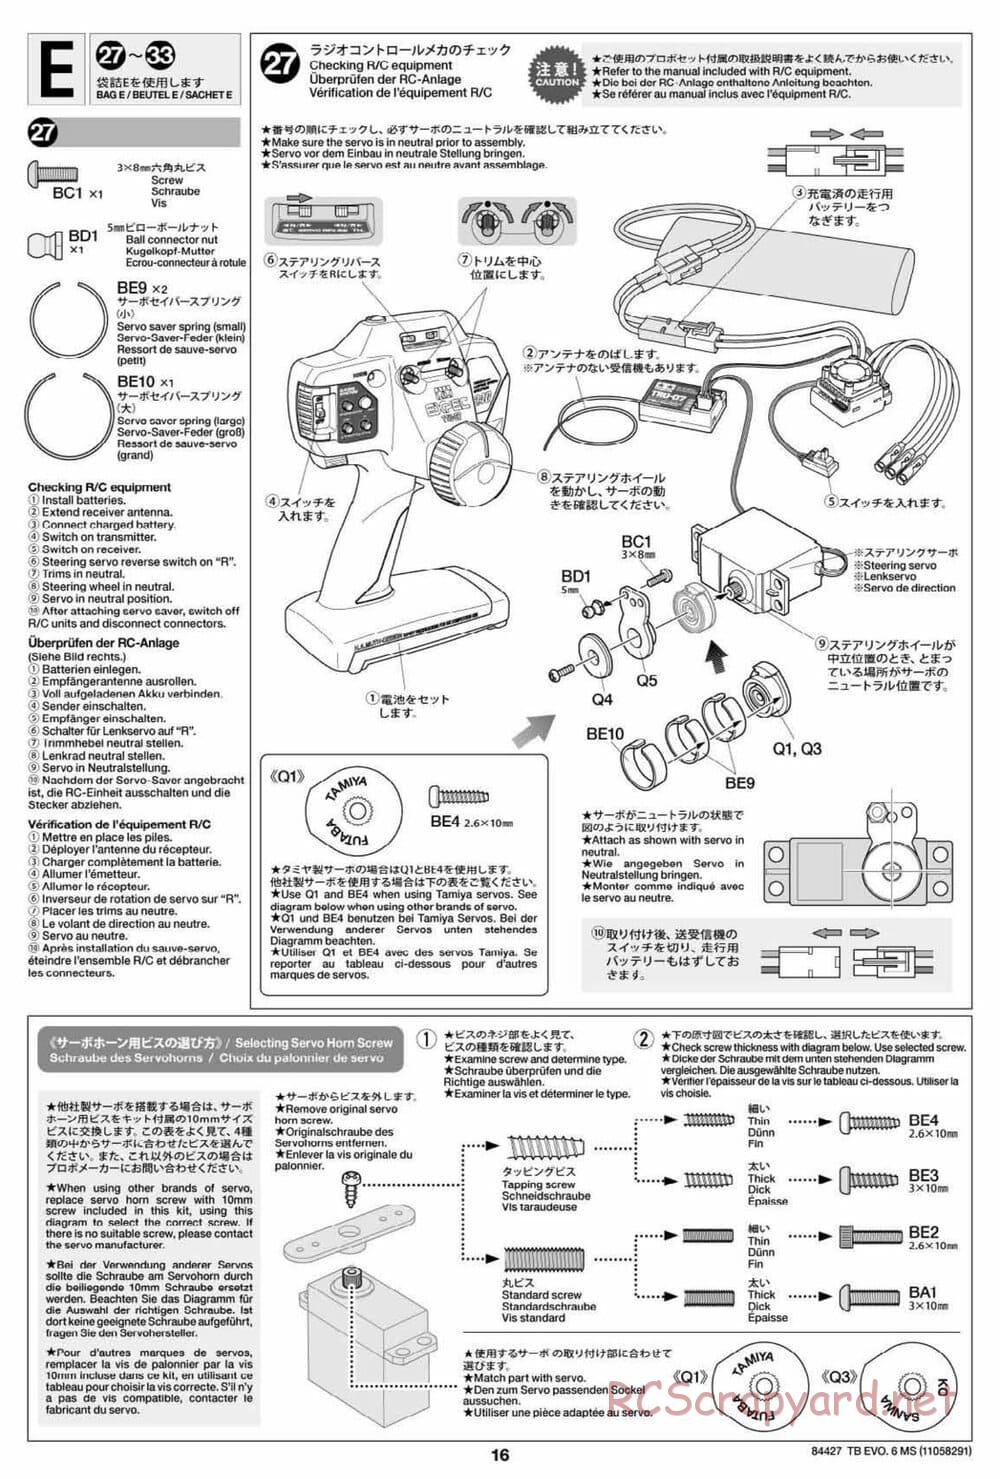 Tamiya - TB Evo.6 MS Chassis - Manual - Page 16